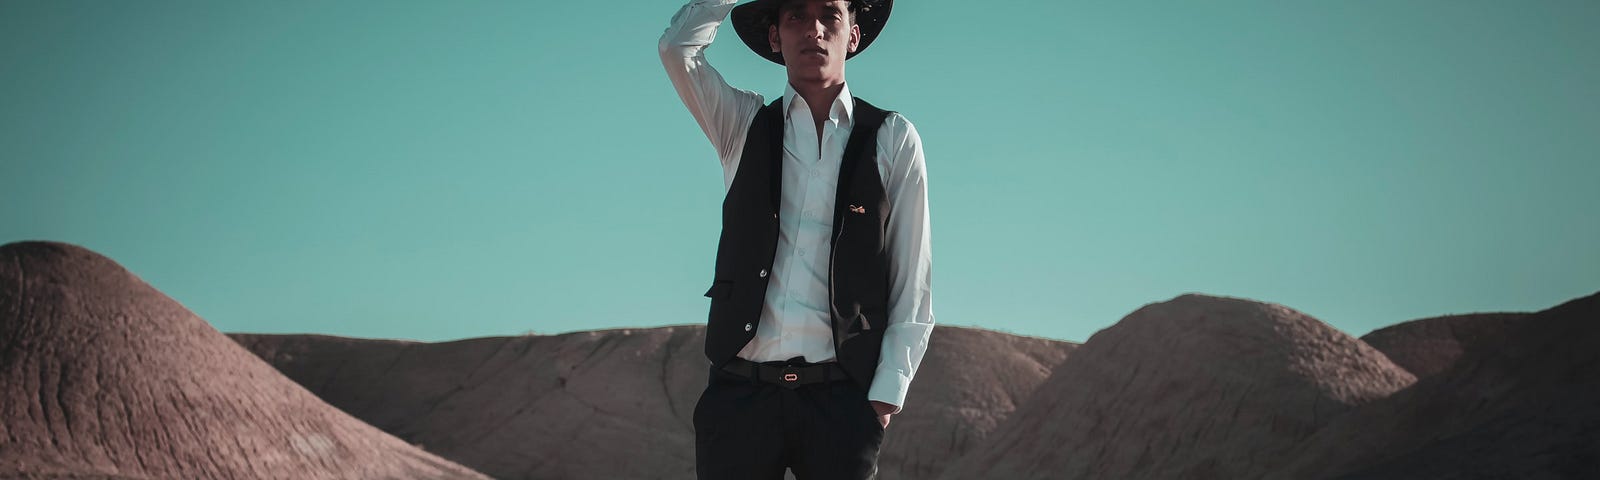 A cowboy in the desert.